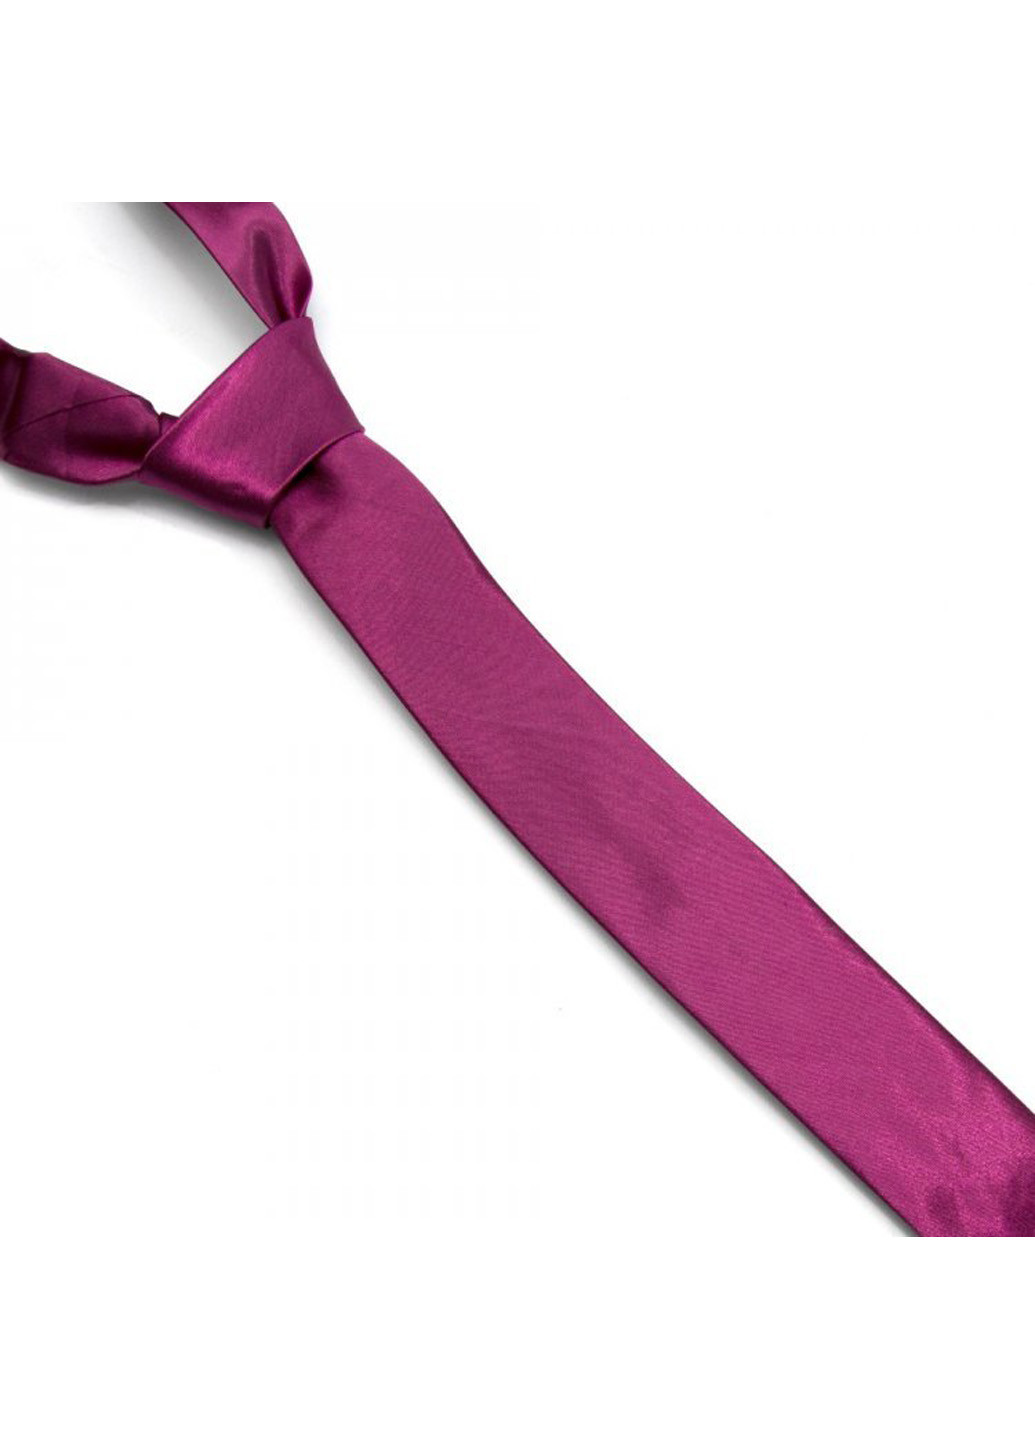 Мужской галстук 5 см Handmade (191127737)